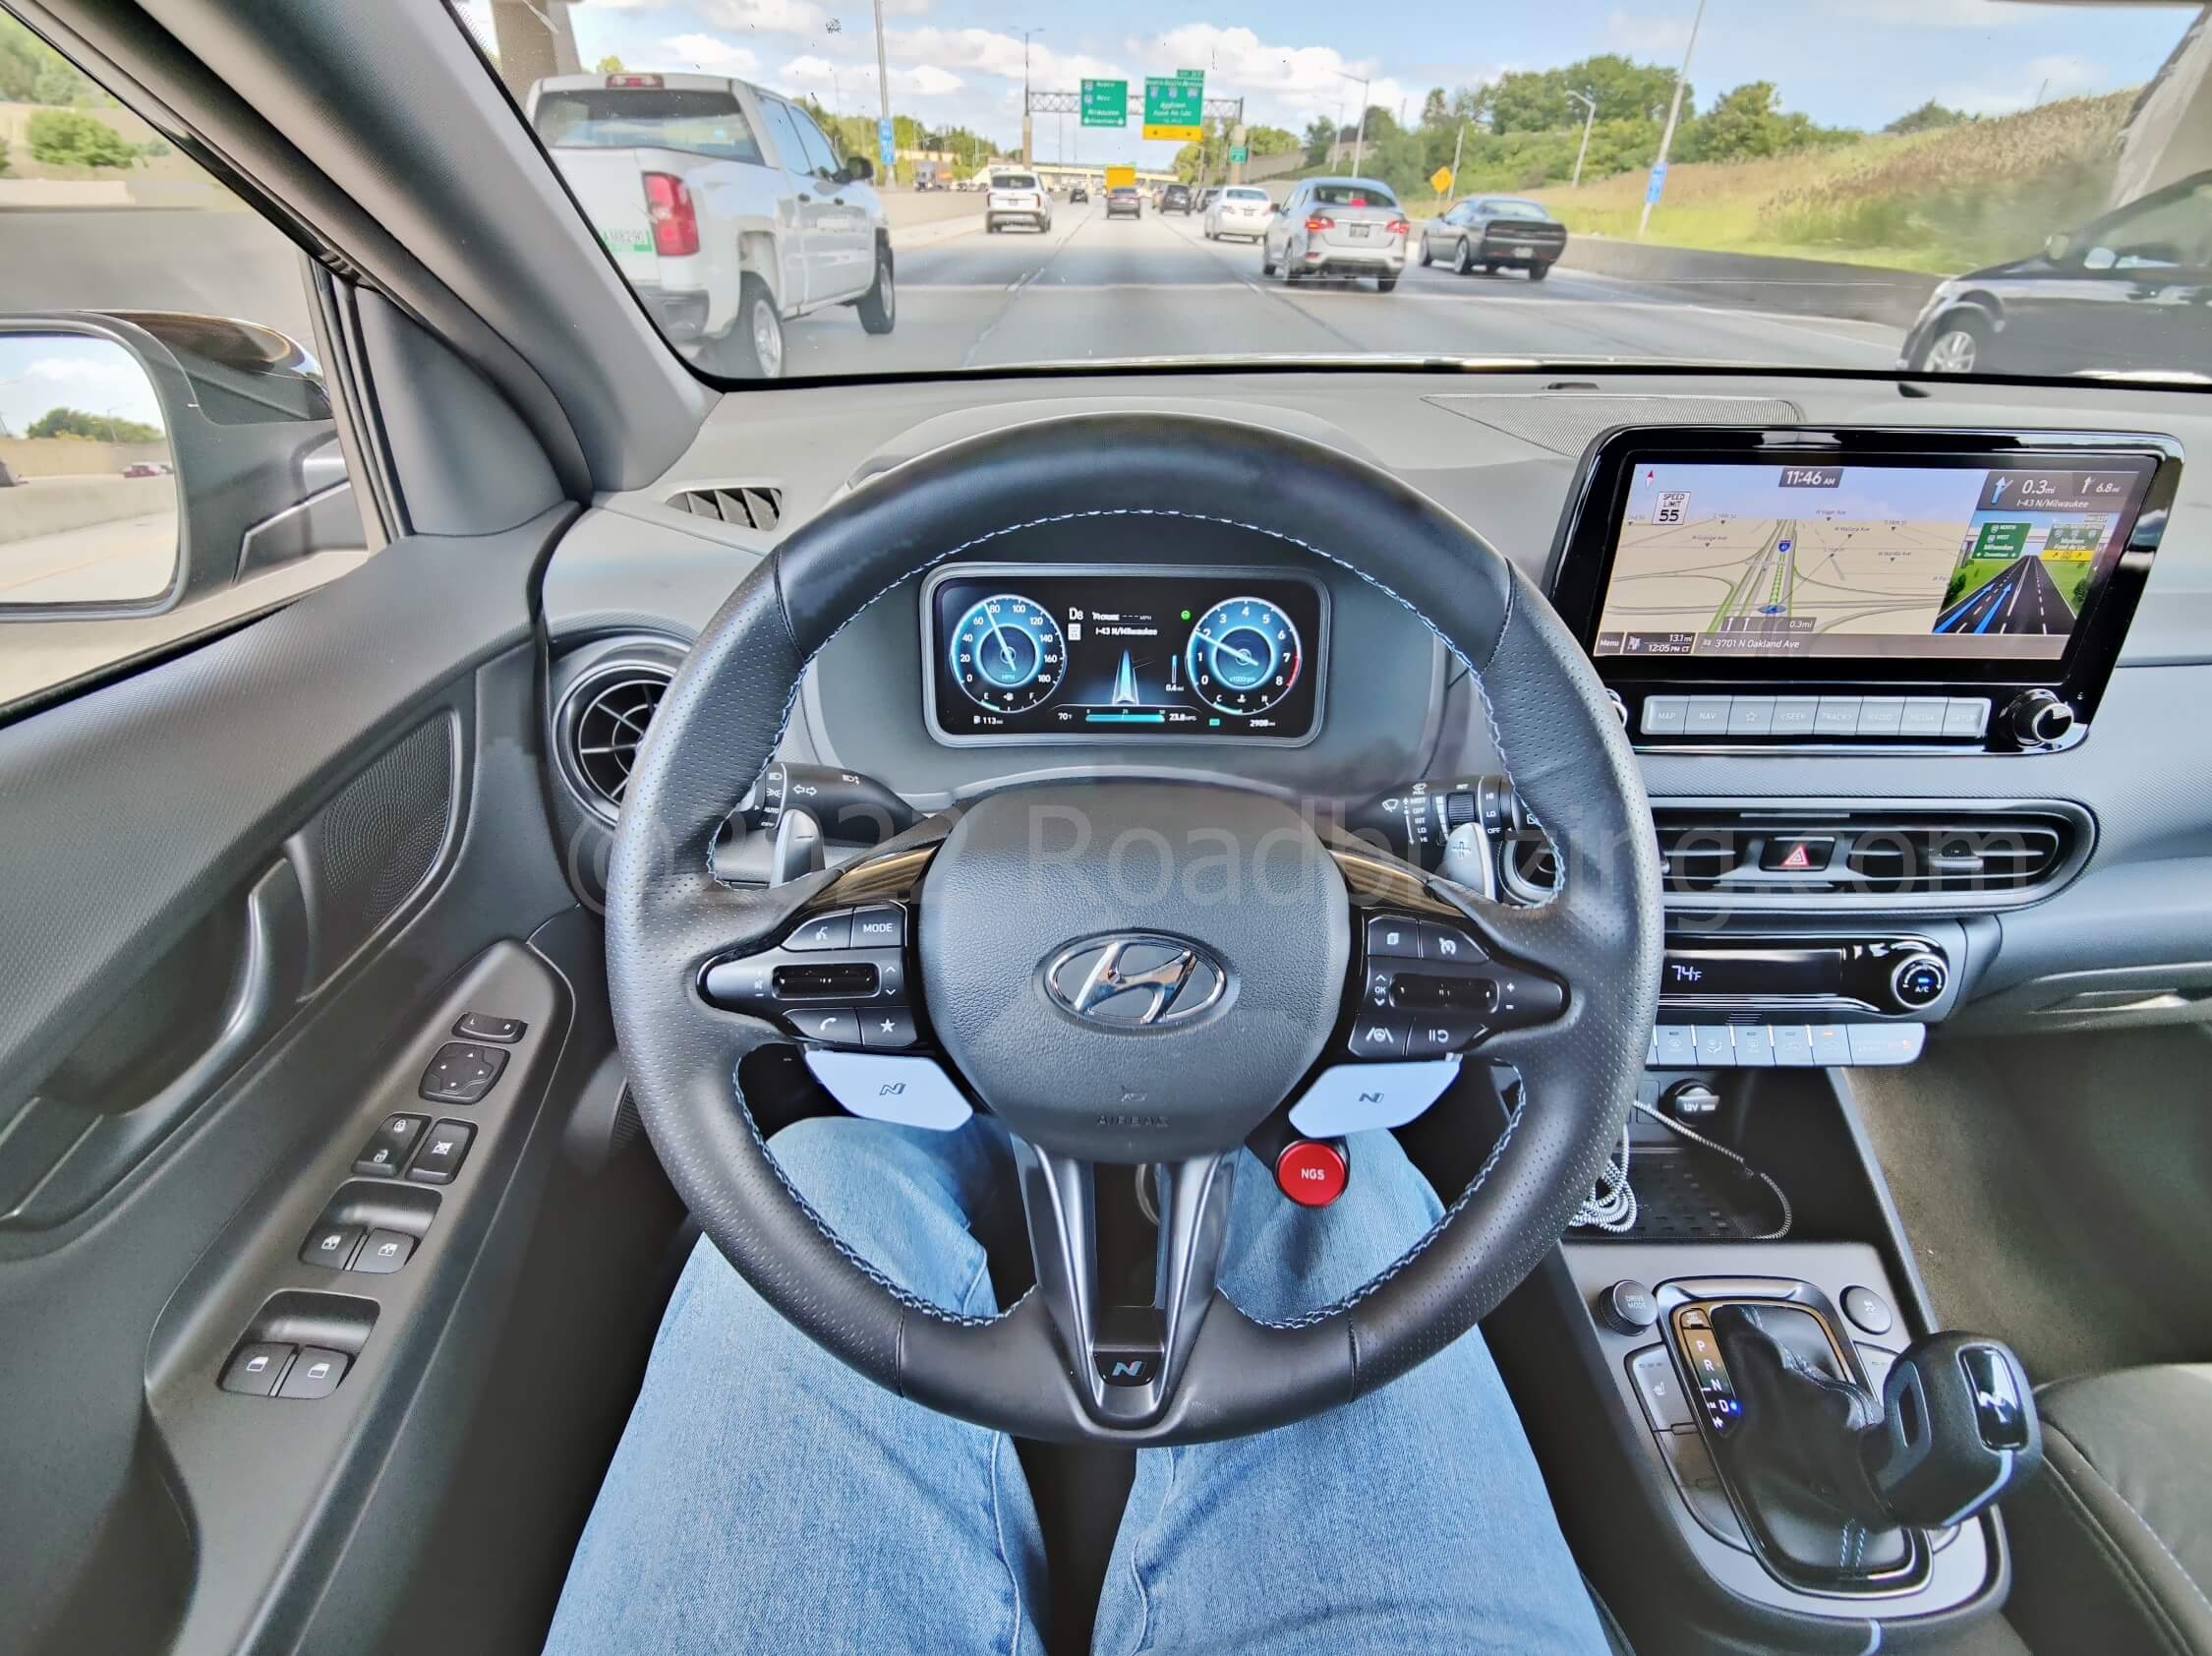 2022 Hyundai Kona DCT: navigating with directions in gauge cluster + split media screen